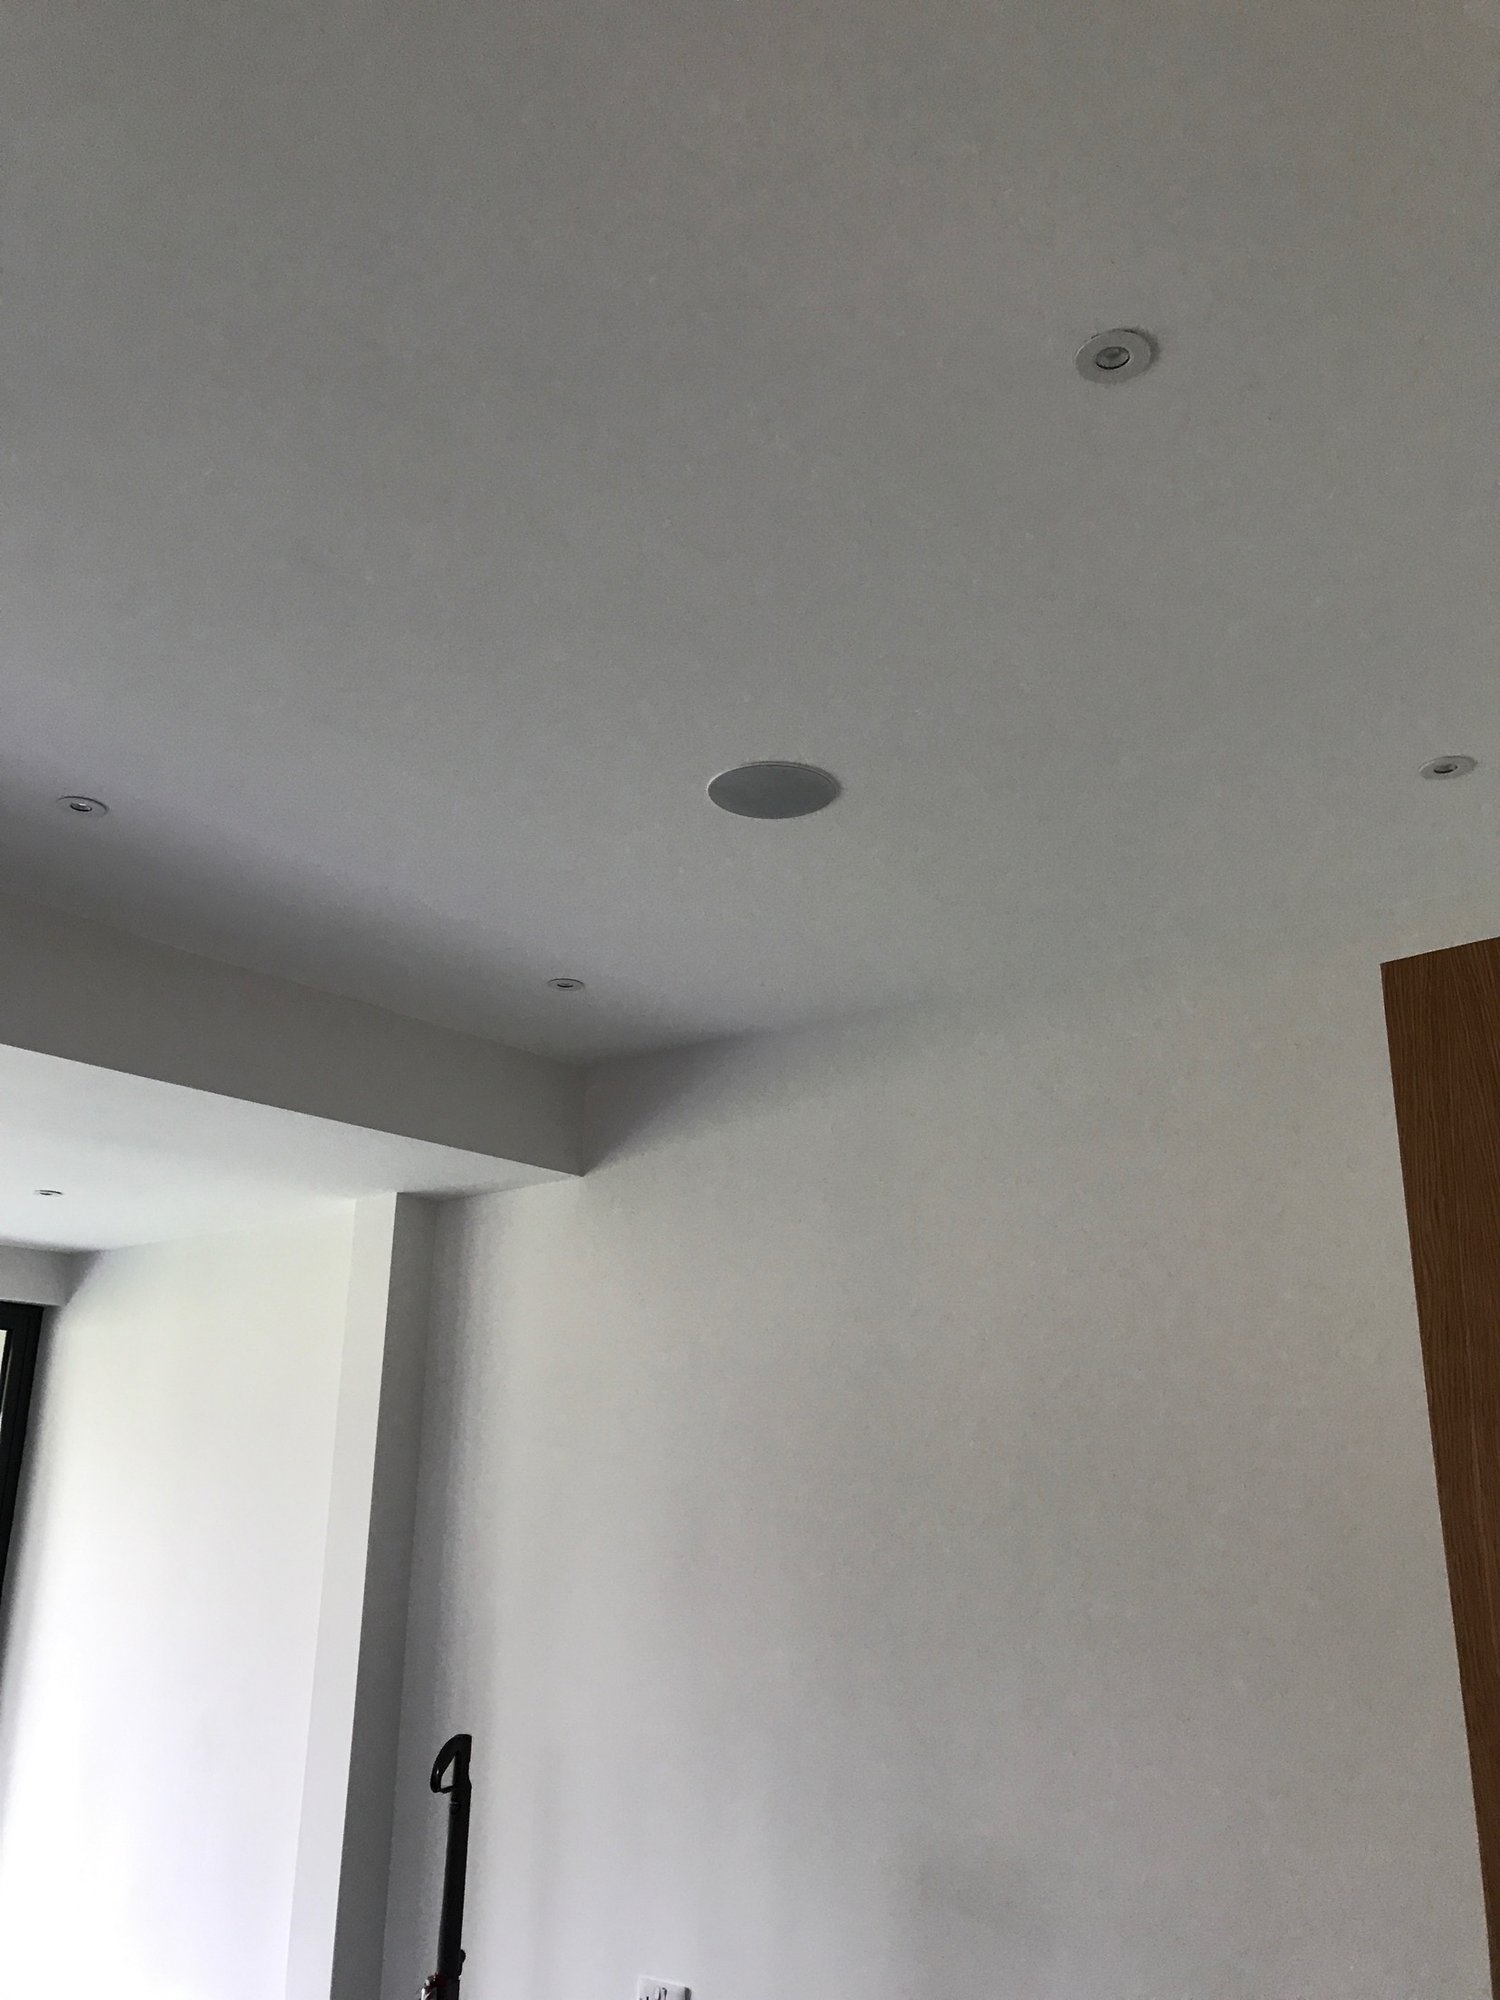 Klipsch in-ceiling speakers